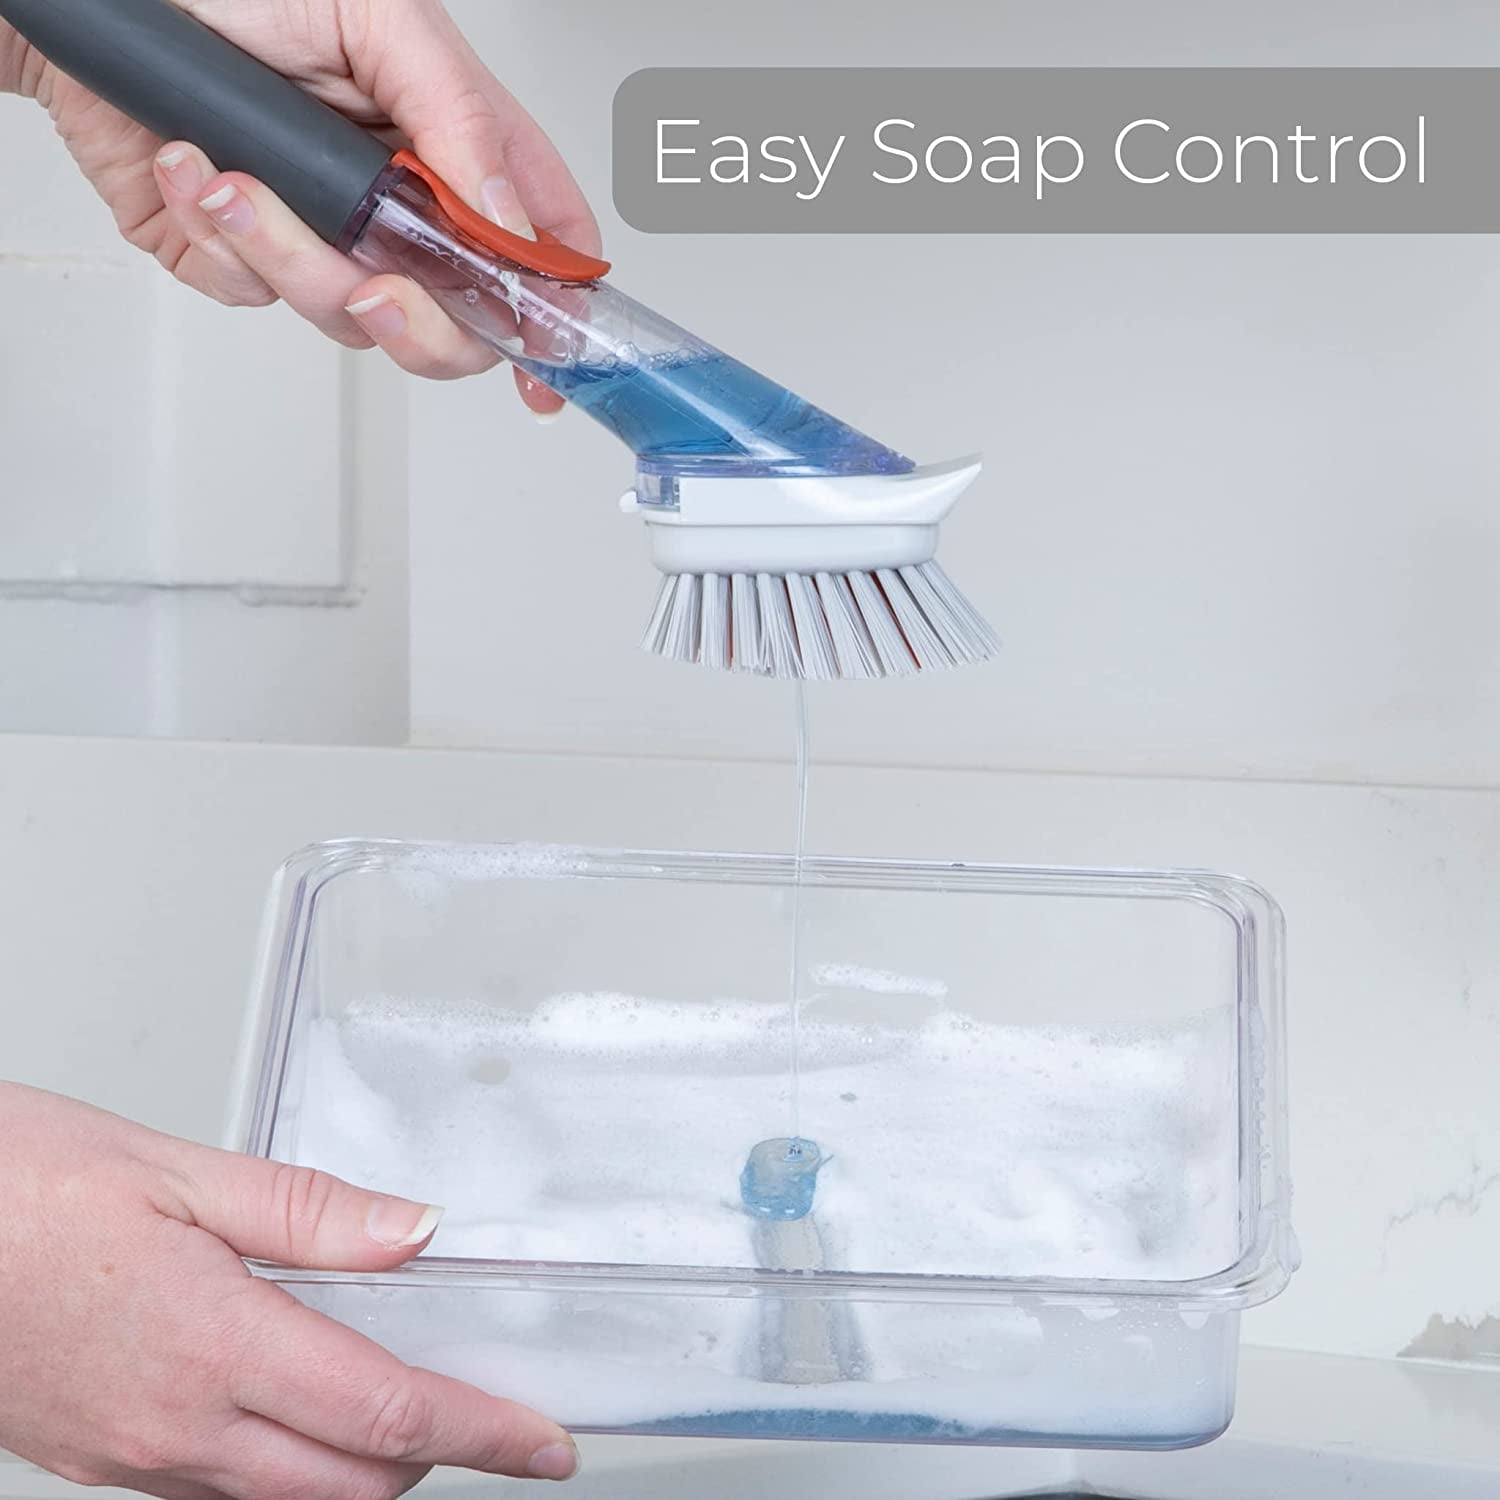 Smart Design Replacement Head for Non Scratch Soap Dispensing Dish Brush - Set of 2 - Built-in Scraper - Long Lasting Bristles - Odor Resistant - Clea